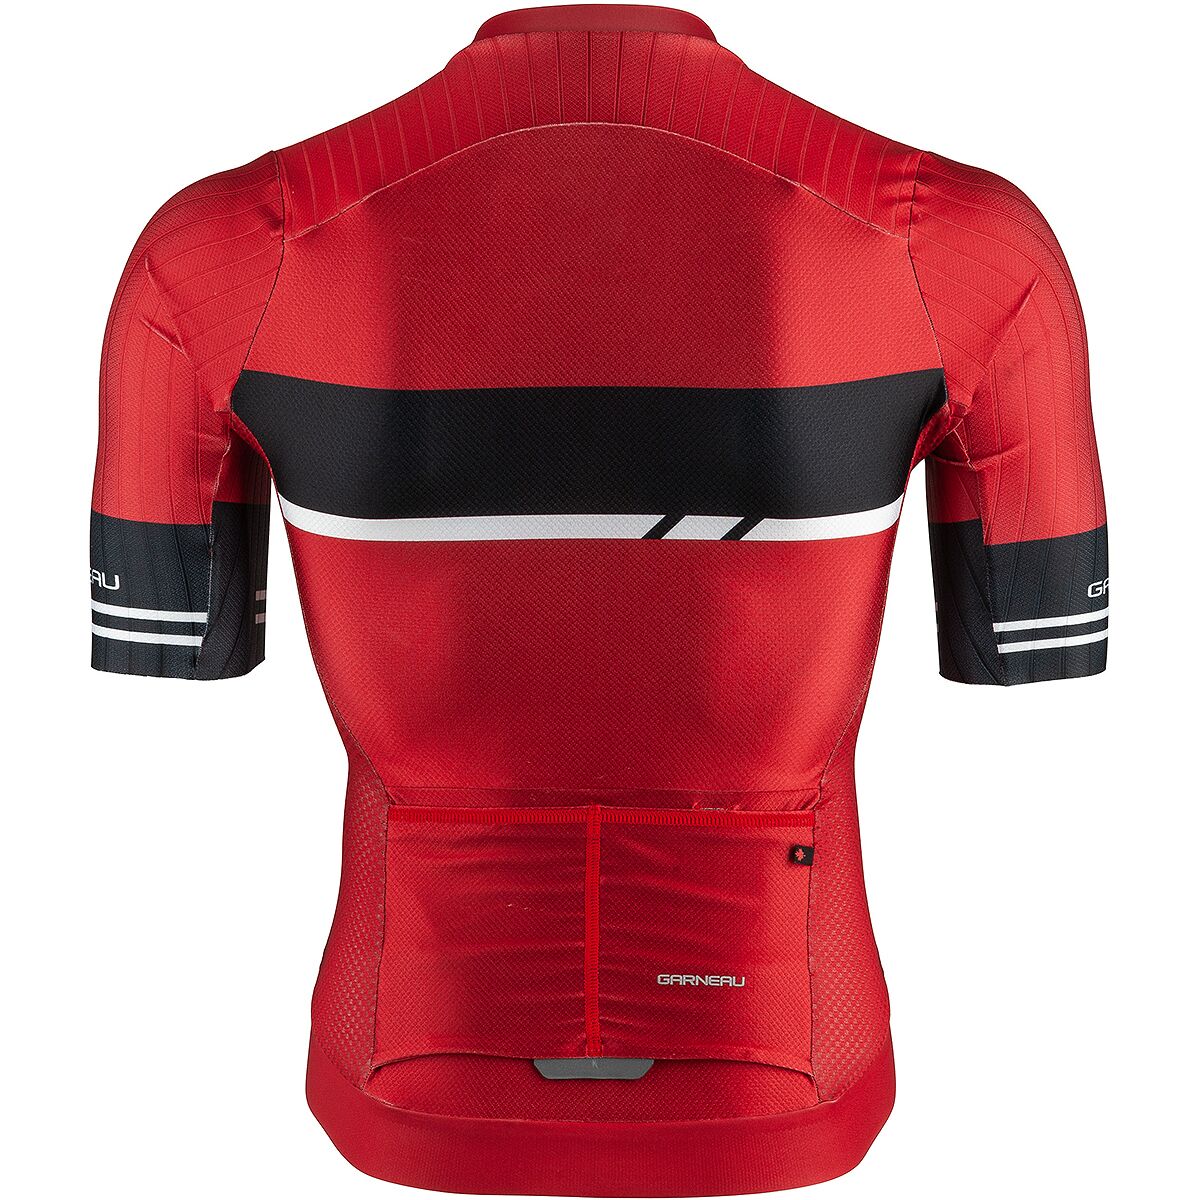 Louis Garneau Equipe Pro Jersey Men's XL Red/Black Retail $114.99